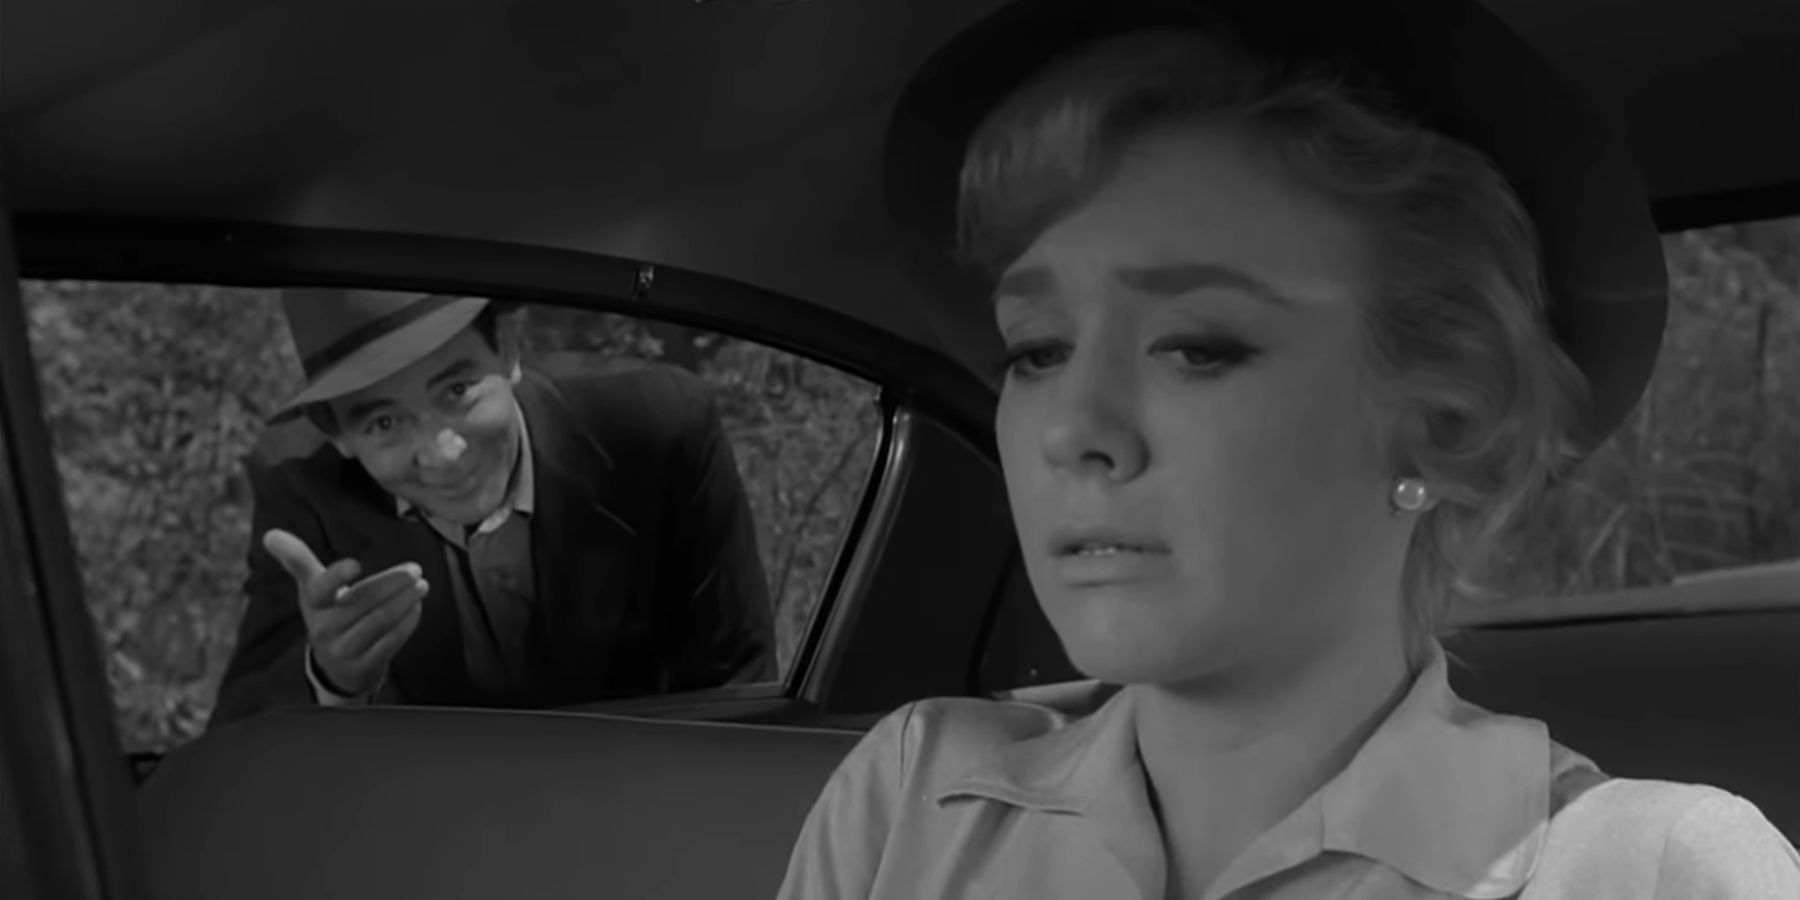 15 Best Episodes Of The Twilight Zone, According To IMDb